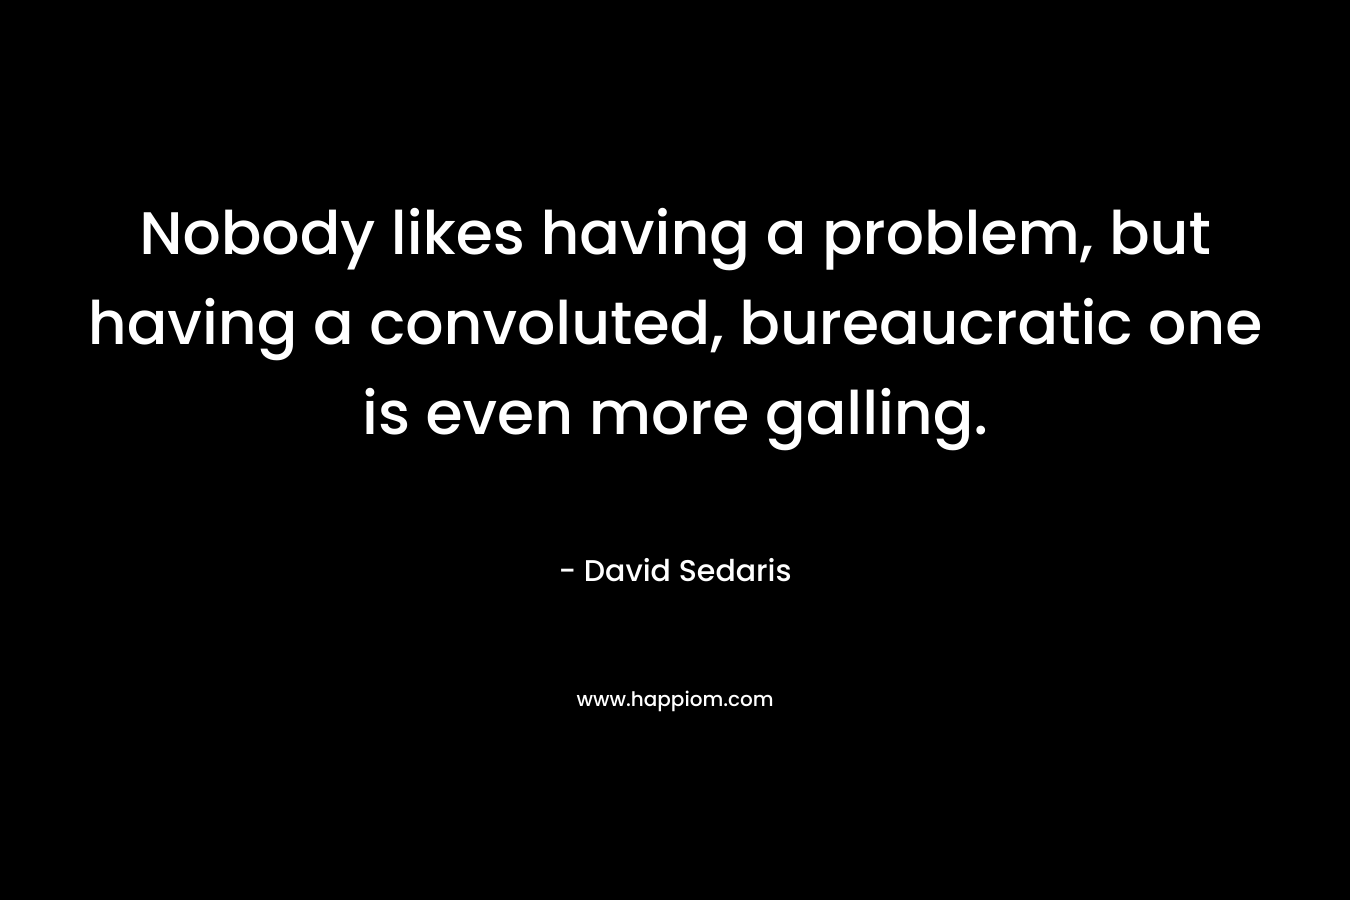 Nobody likes having a problem, but having a convoluted, bureaucratic one is even more galling. – David Sedaris